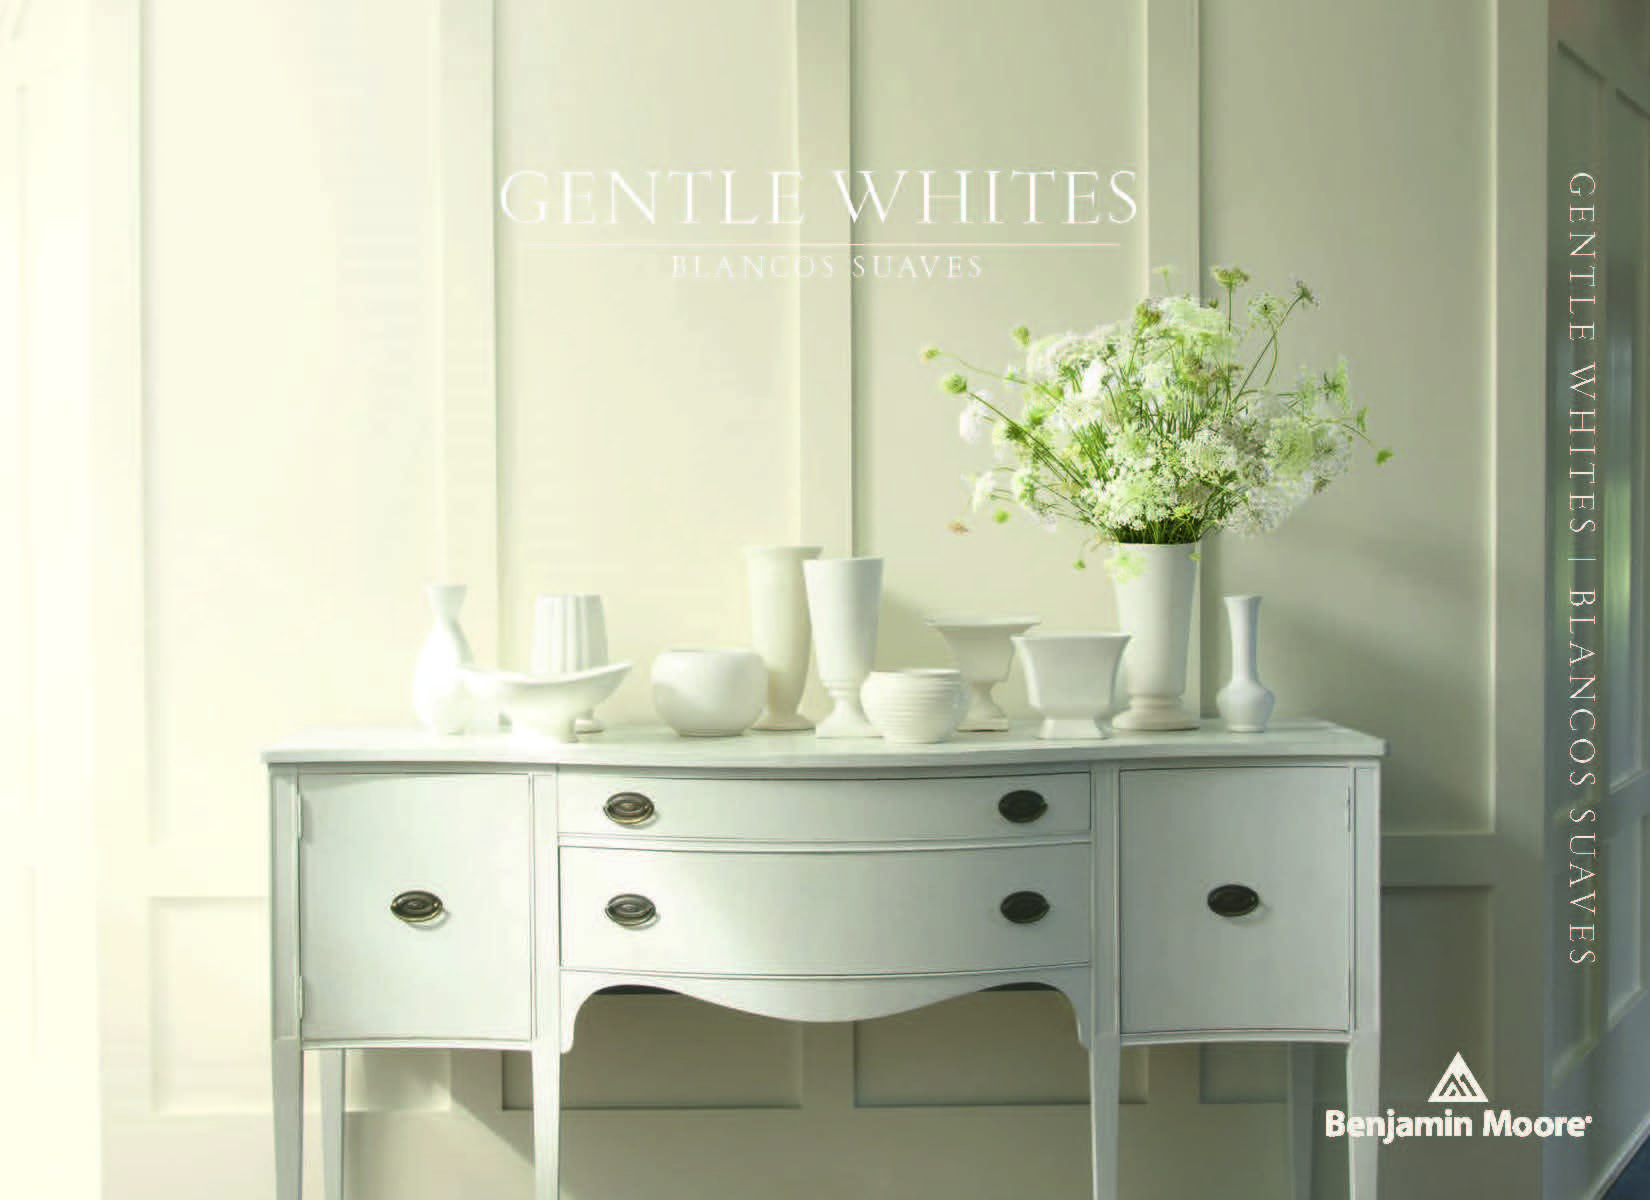 Benjamin Moore Catalog_Gentle Whites Cover